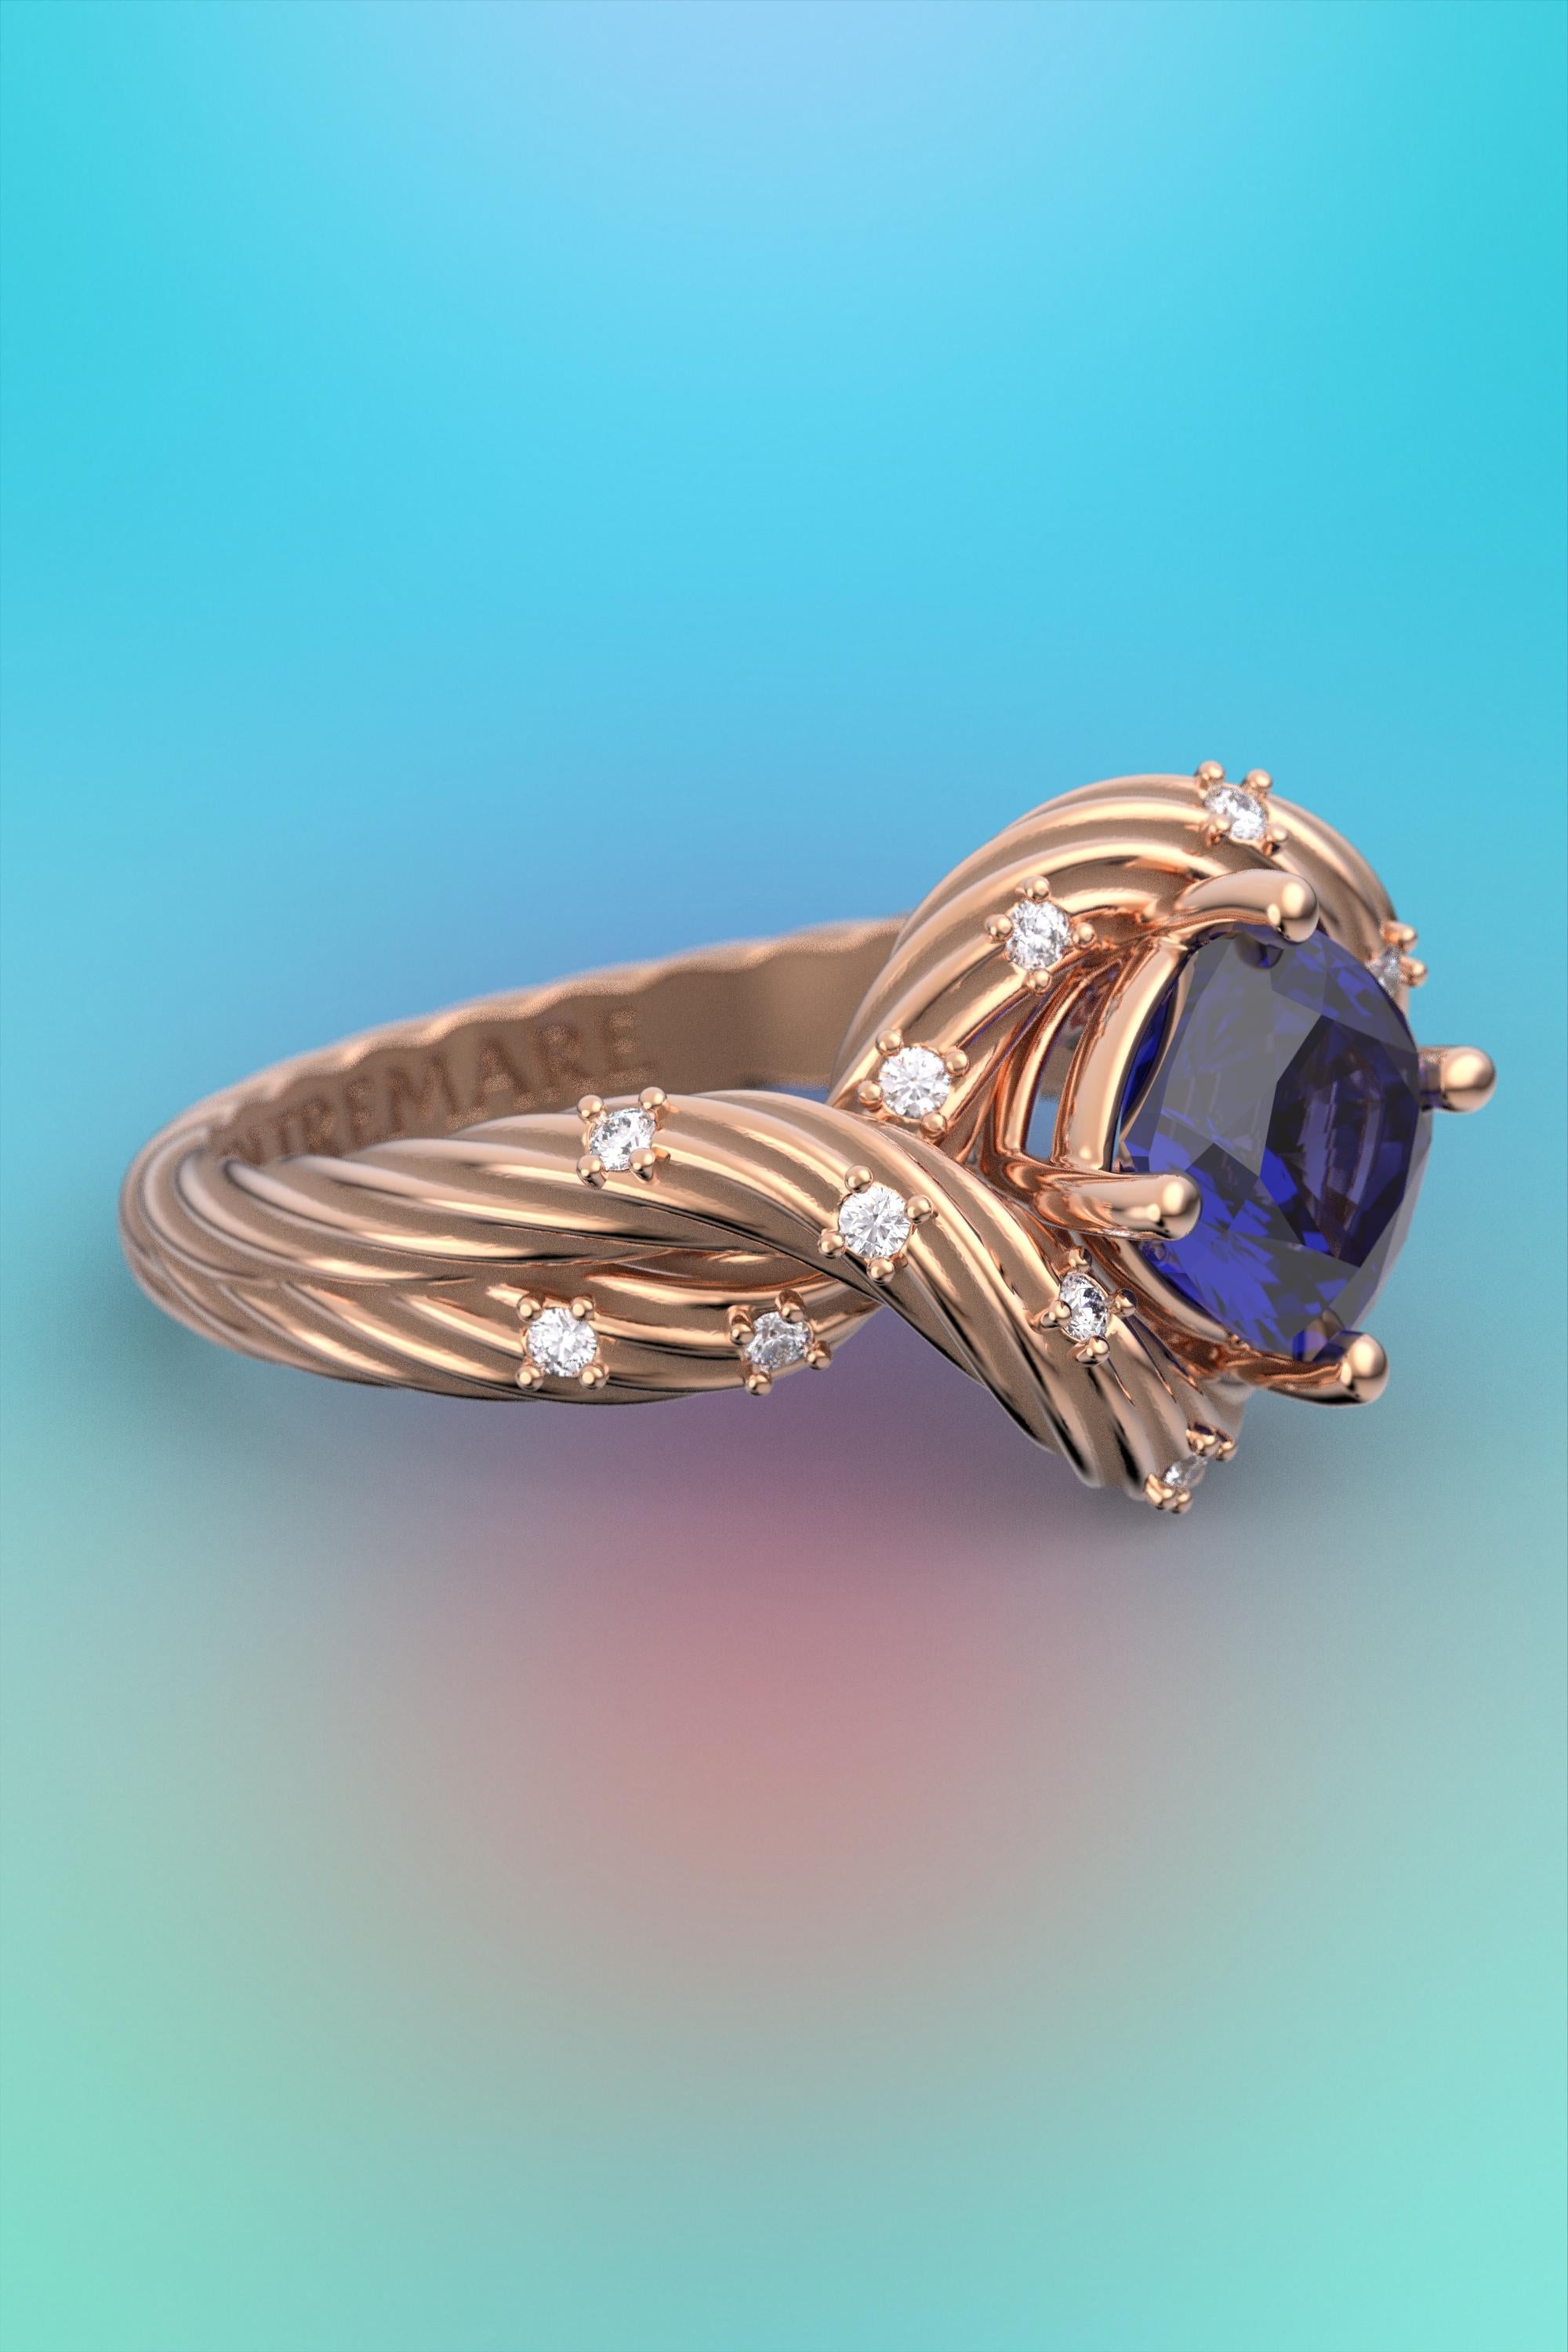 For Sale:  Tanzanite and Diamonds Statement Ring in 18k Solid Gold, Italian Fine Jewelry 14